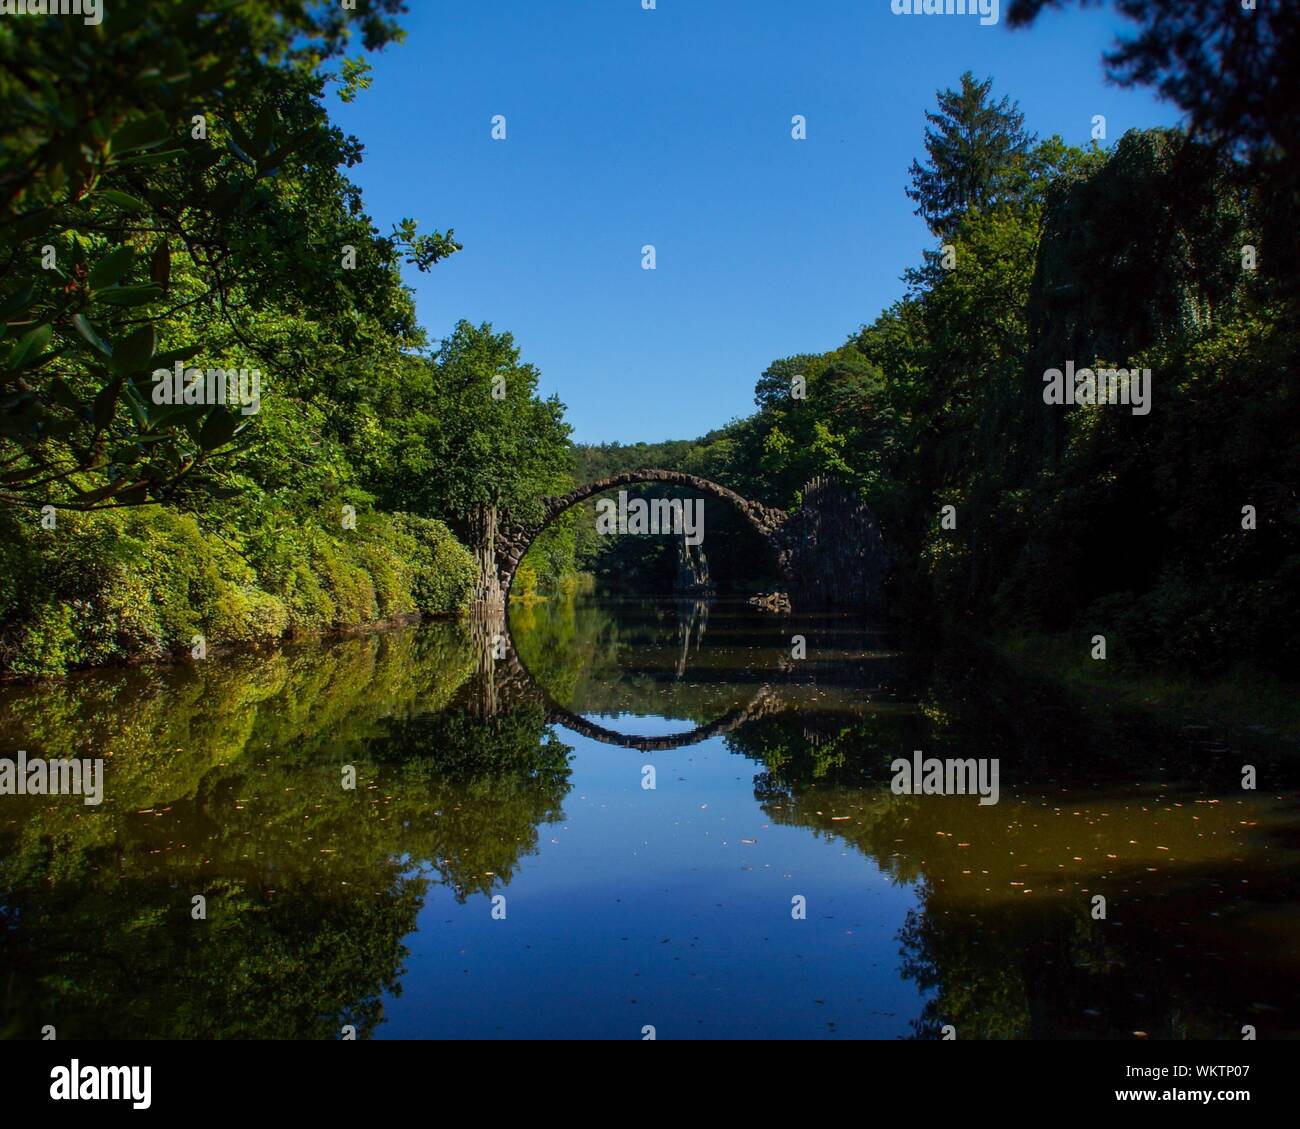 Rakotz Bridge Reflection On River Amidst Trees Against Clear Blue Sky Stock Photo